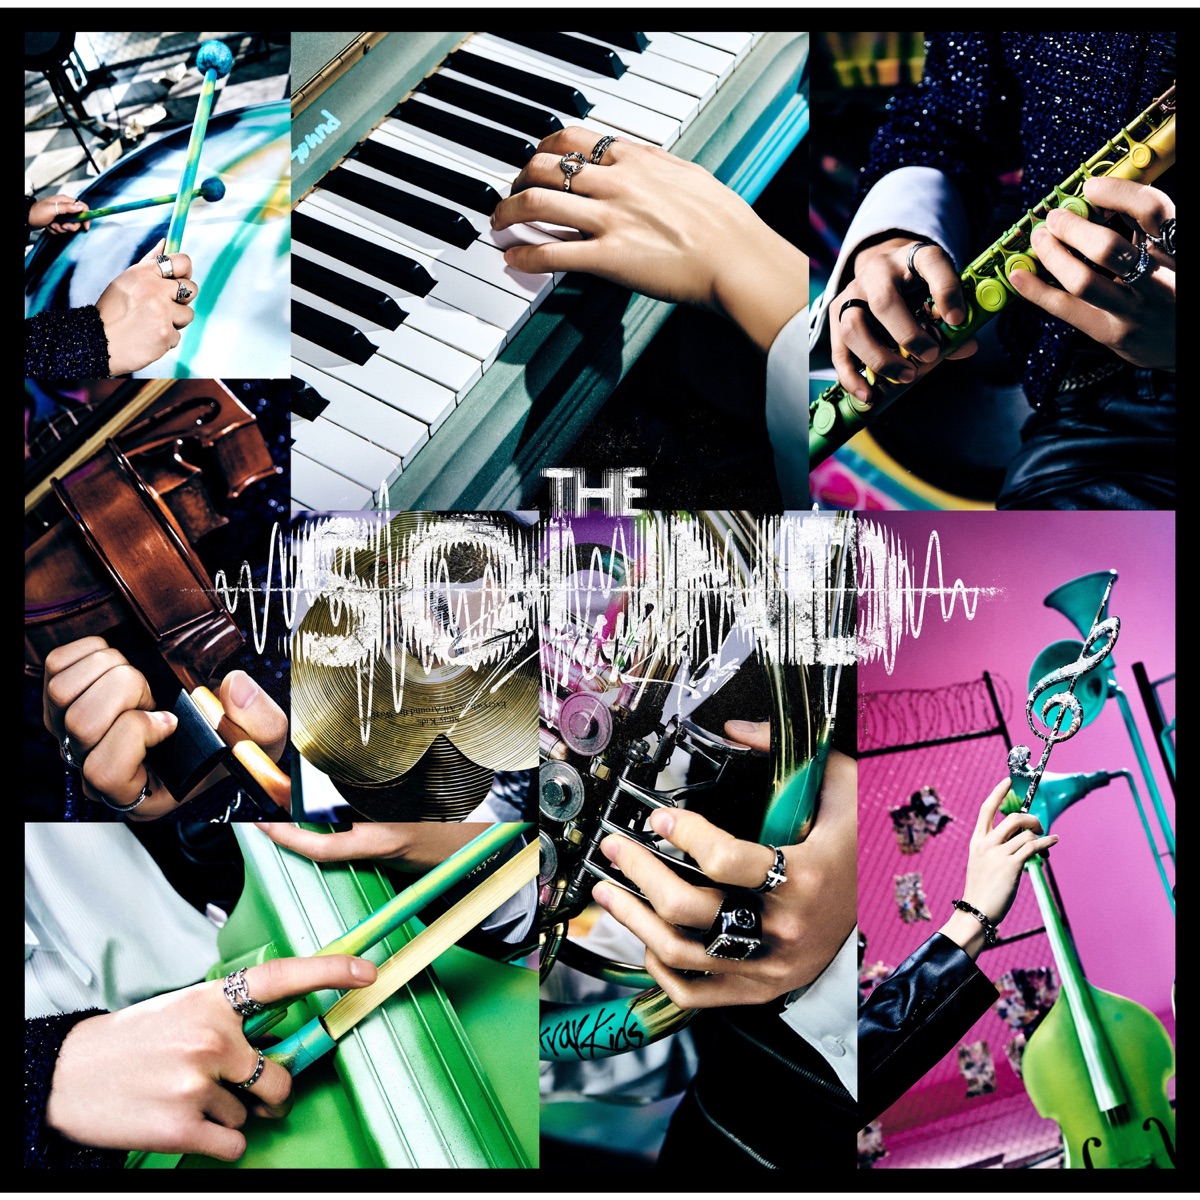 ‎THE SOUND - Album by Stray Kids - Apple Music